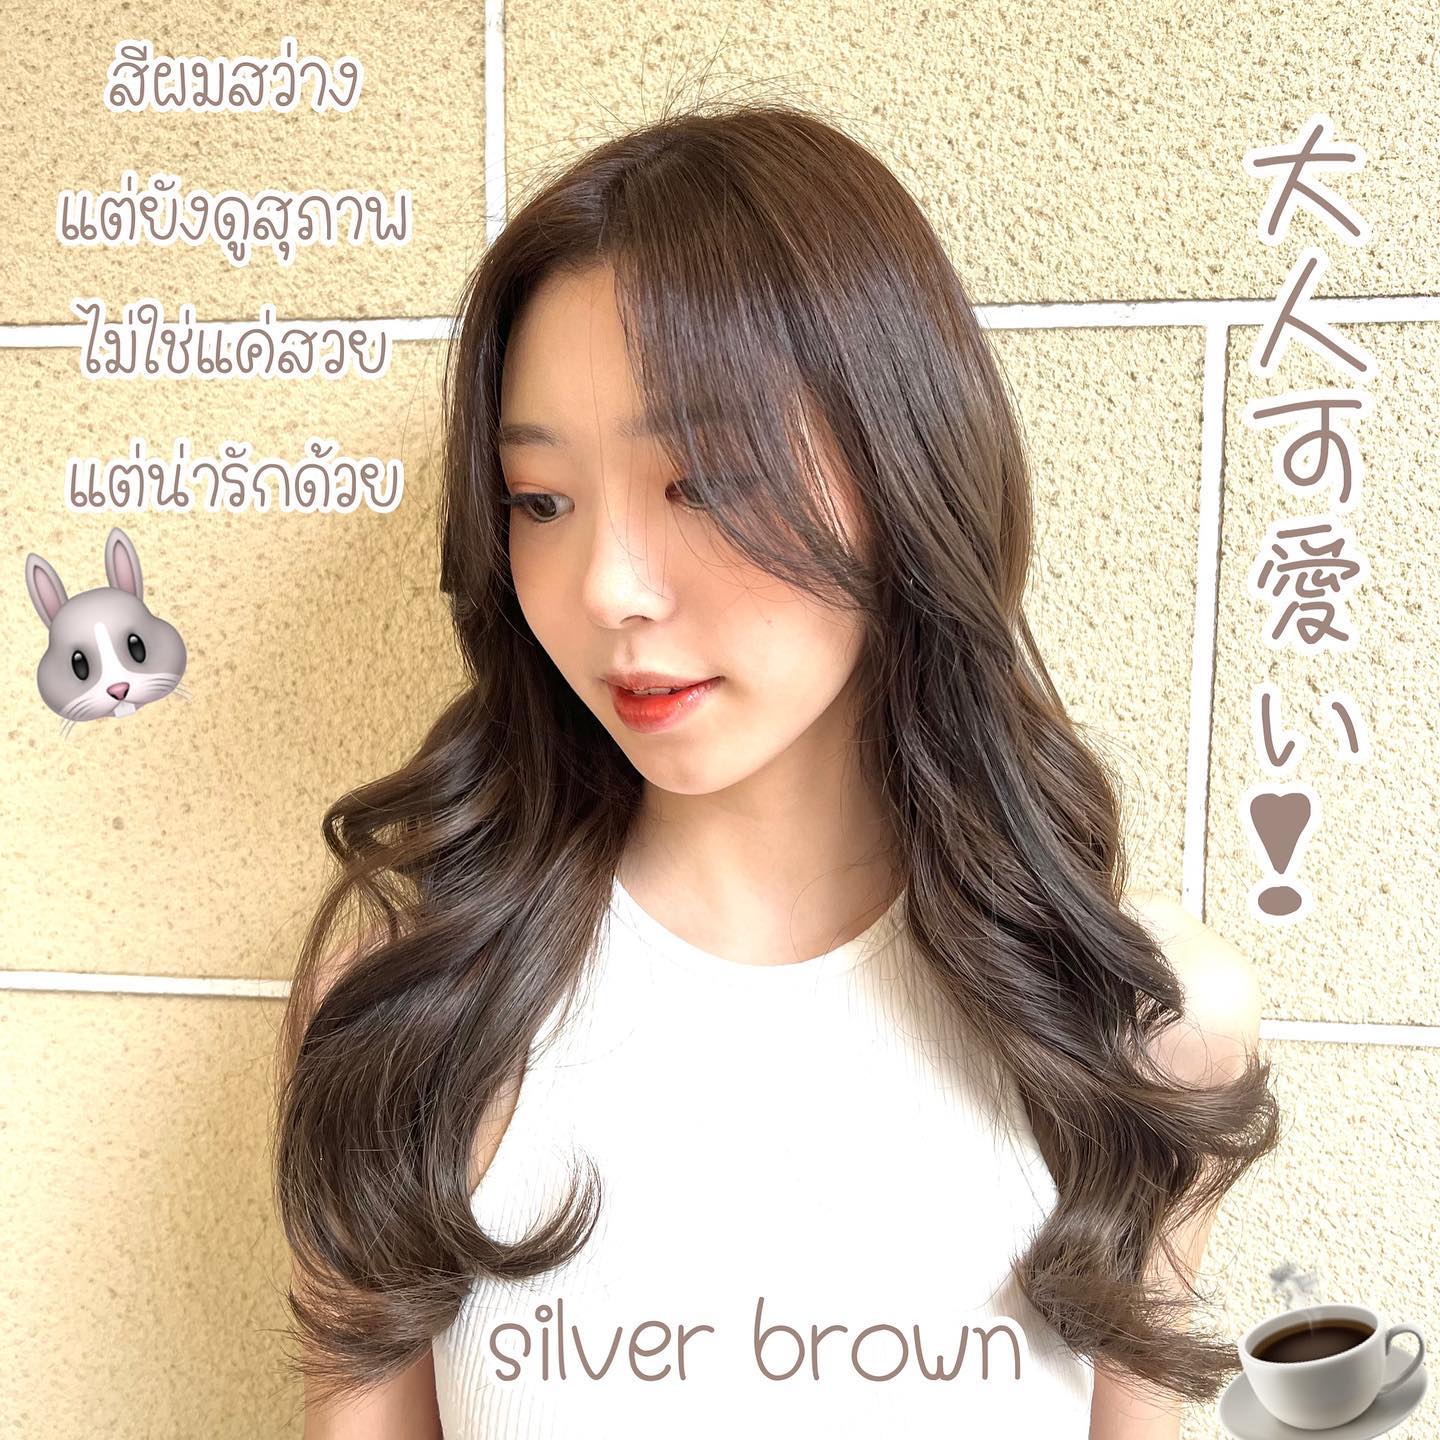 Silver Brown🤍สีสุภาพดูเรียบร้อย ถ้าเป็นวัยทำงานก็ดูสวยเรียบร้อย ถ้าเป็นวัยรุ่นก็ดูน่ารัก เข้ากับทุกวัยเลยค่ะ🫶🏽  Stylist Yamada  YAMS hair&cafe  For booking/ご予約、お問い合わせ↓
LINE ID:@qai5573z
Tel:02-163-4973  Business hours/営業時間↓
9:00 - 18:00
Closed on Wednesday,2nd & 4th Thursday  #ร้านทำผมญี่ปุ่น #YAMShaircafe #ตัดผมญี่ปุ่น #ยืดผมญี่ปุ่น #ดัดผมญี่ปุ่น #ร้านทำผม #バンコク生活 #バンコク在住 #バンコク暮らし #バンコク子連れ美容室 #バンコク美容室